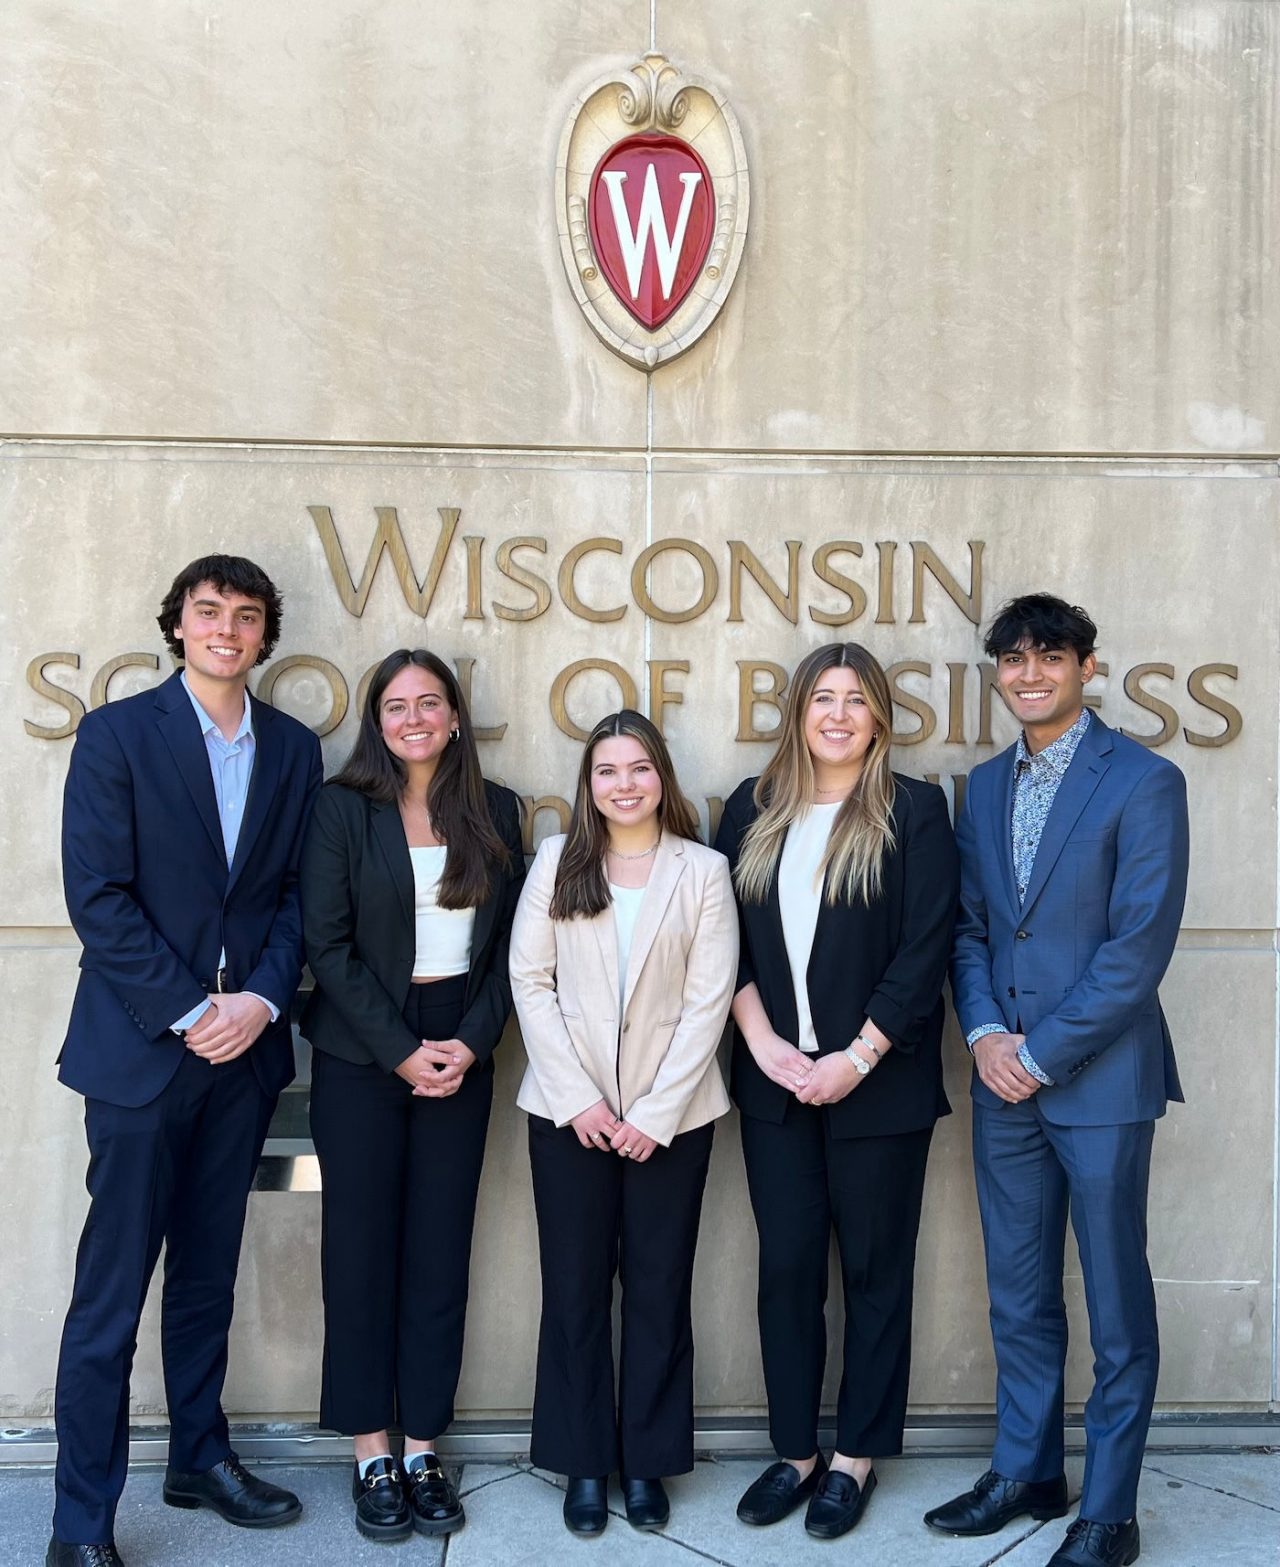 Team Logikon Capital from University of Wisconsin, Madison